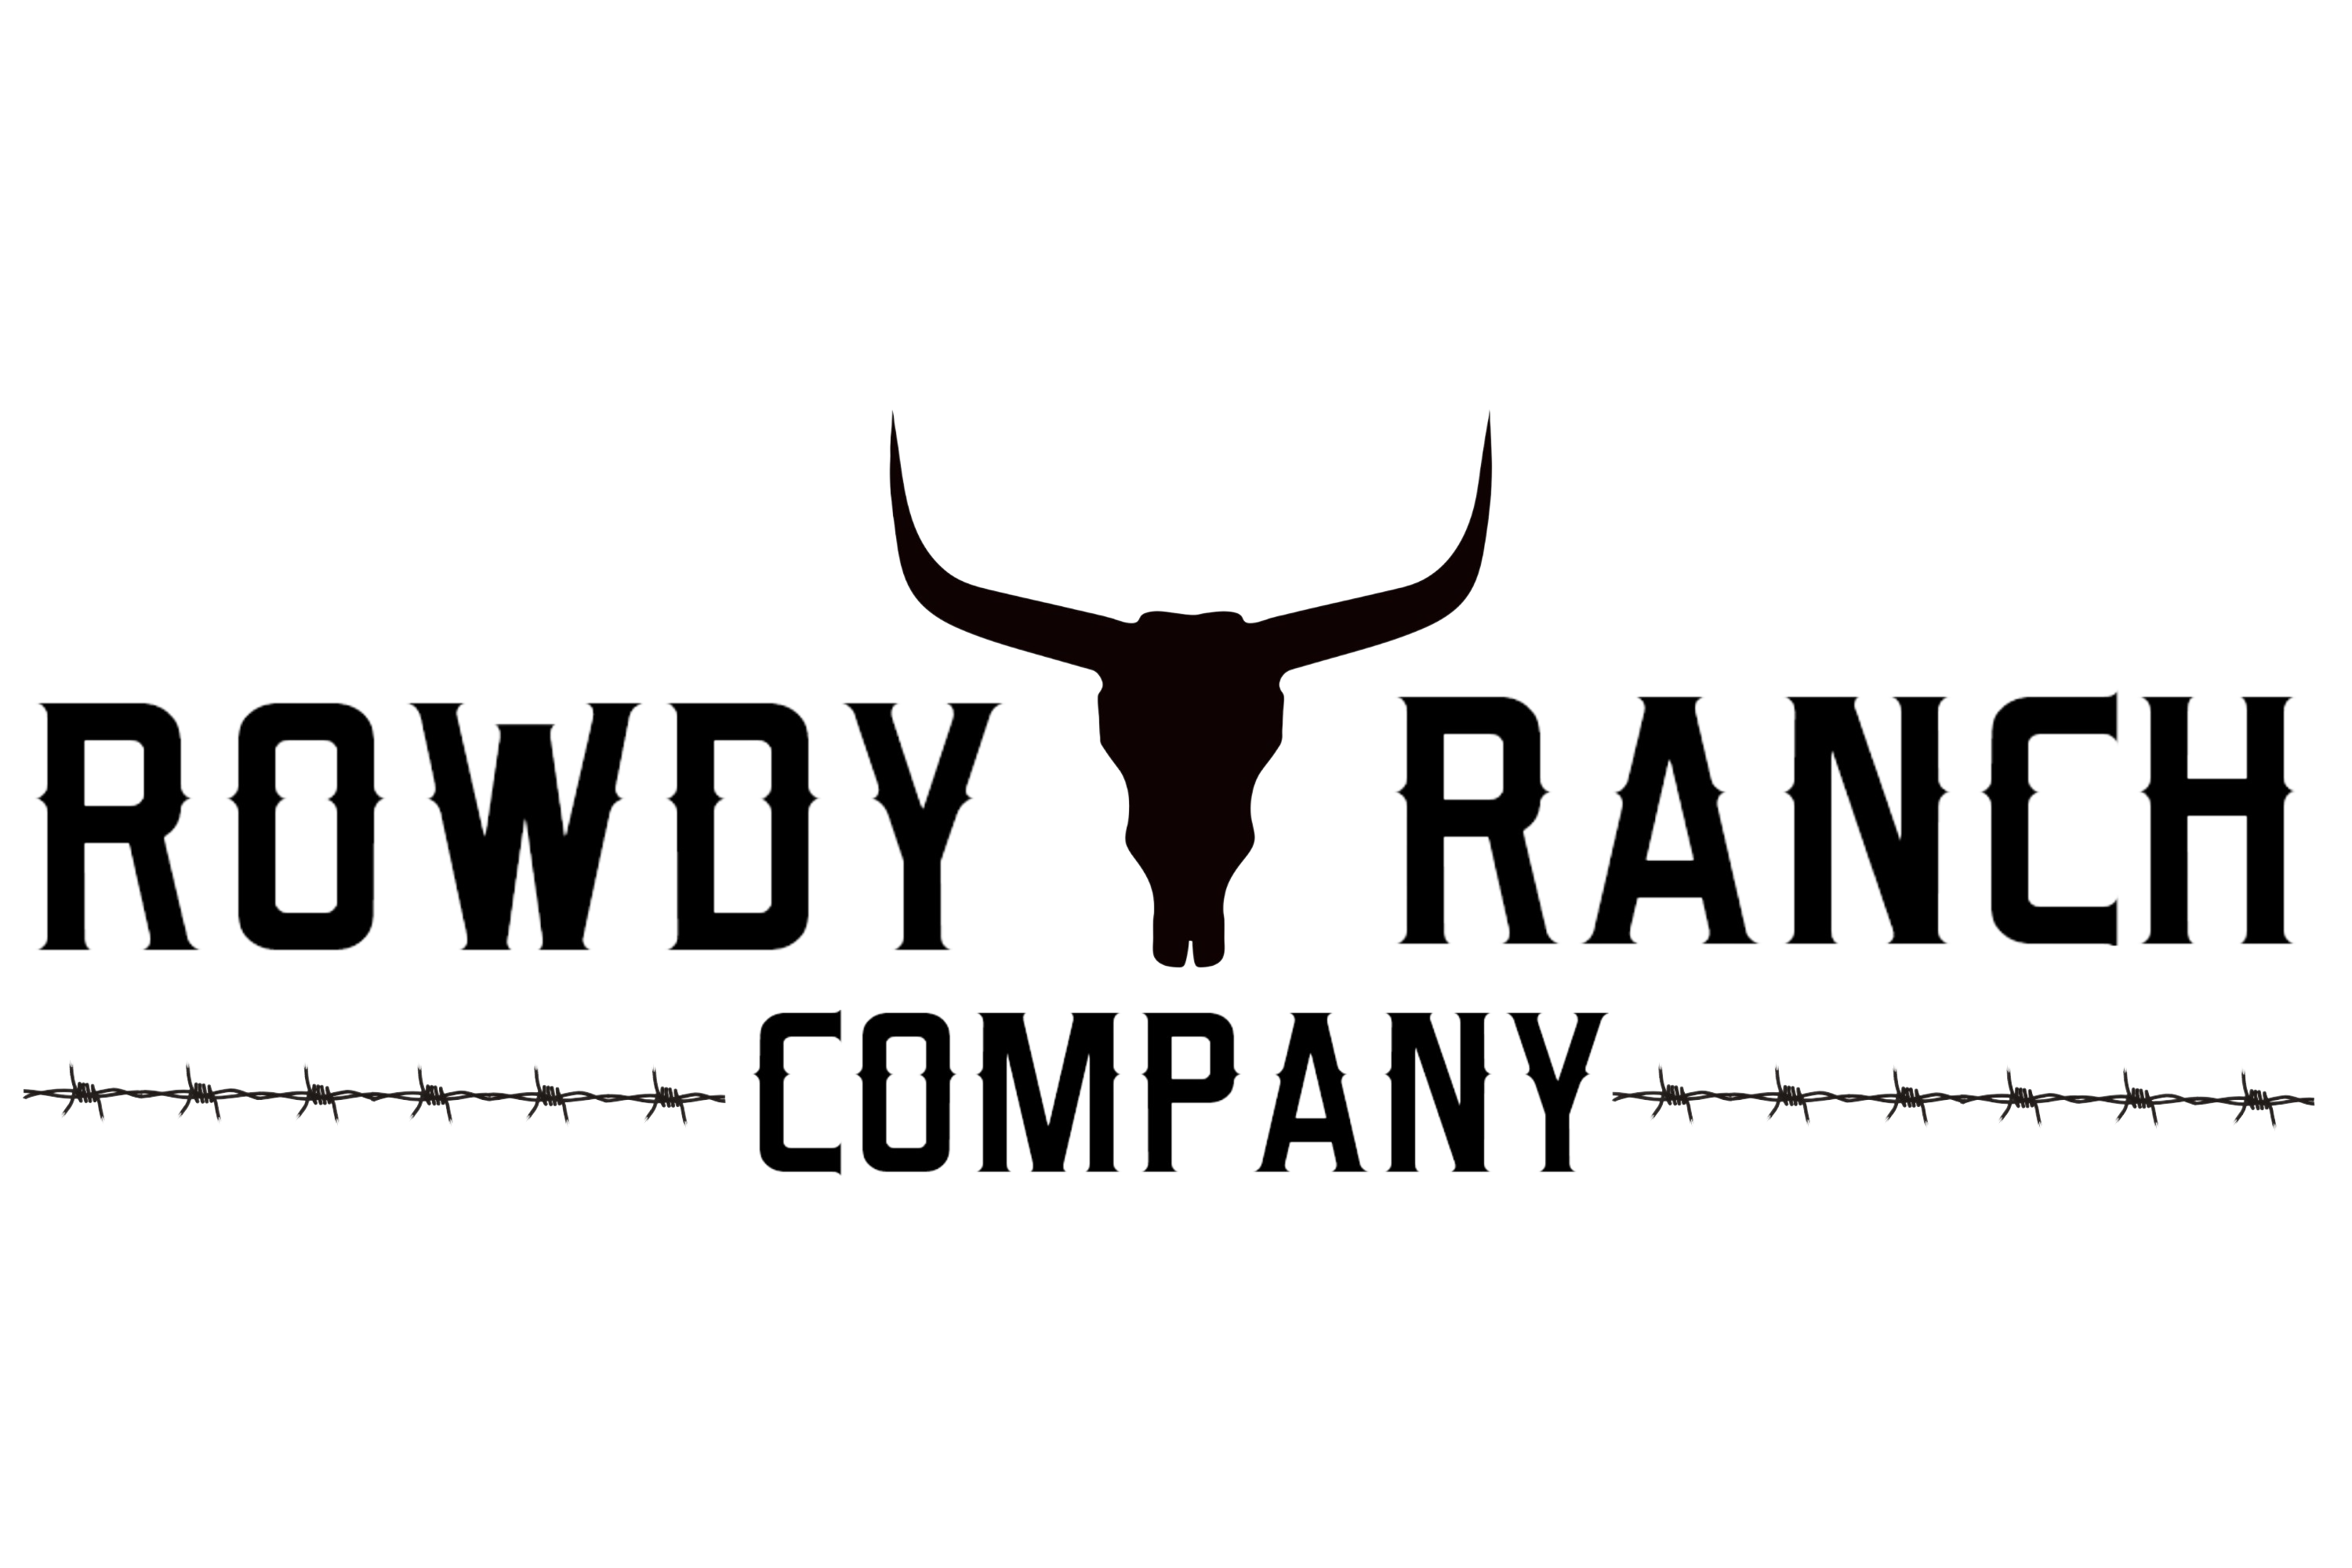 Help rowdy hd with a new logo | Logo design contest | 99designs